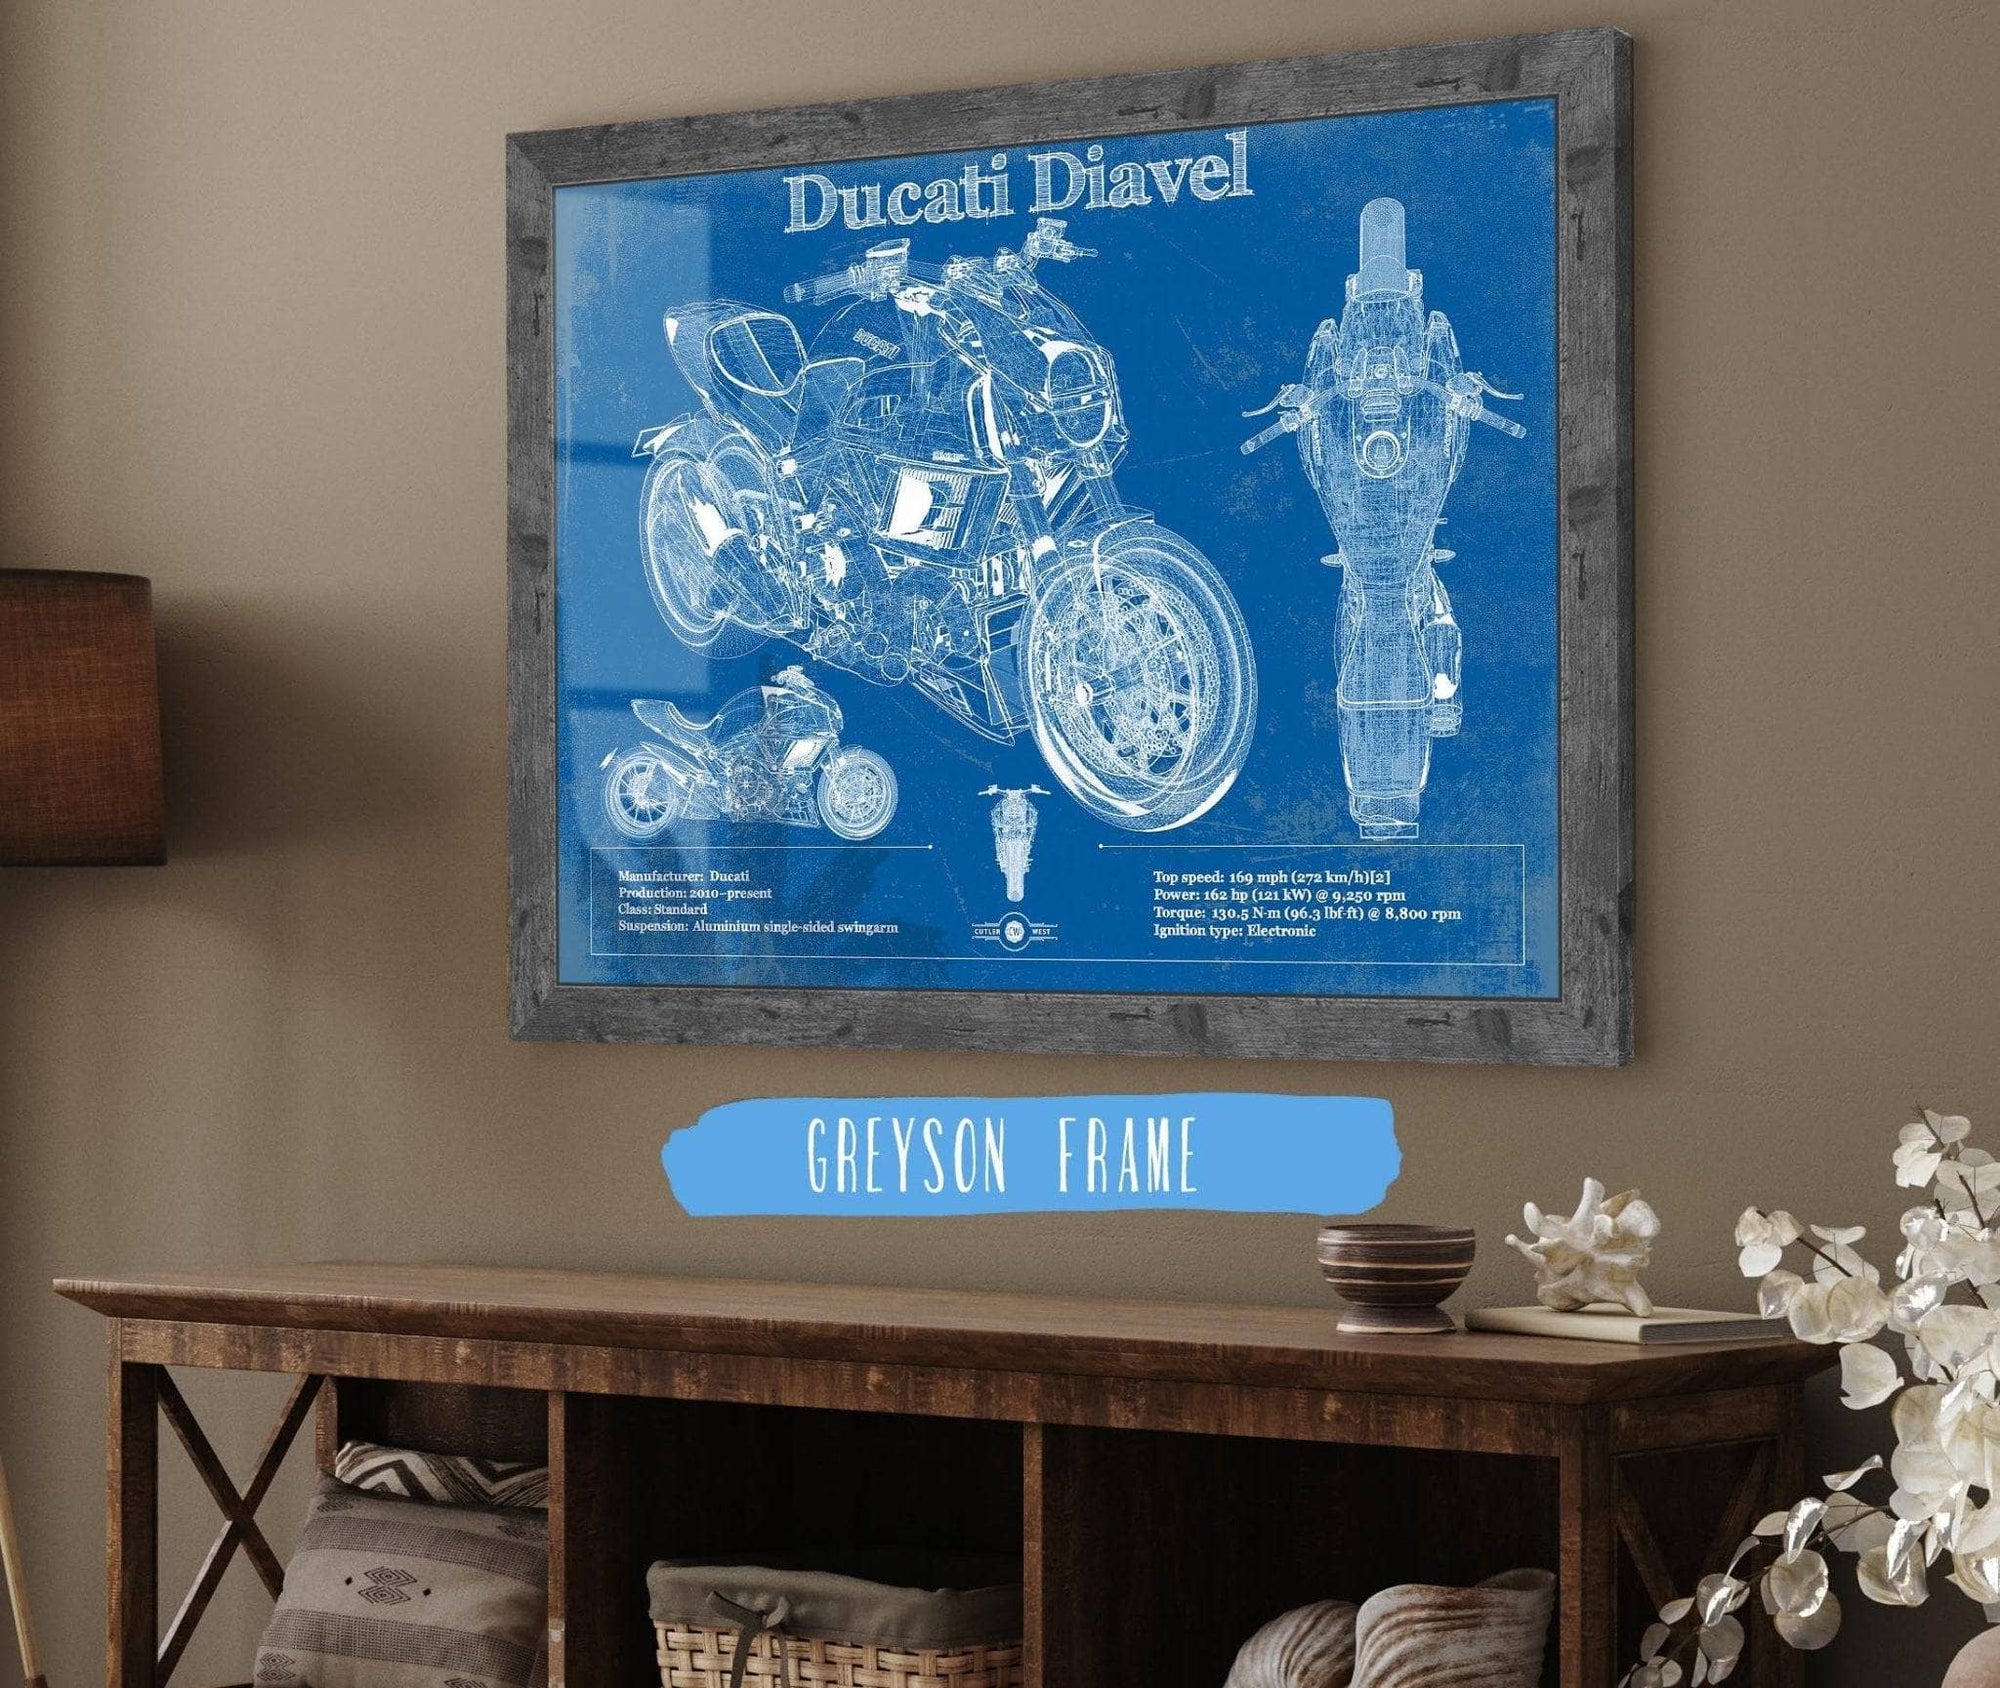 Cutler West 20" x 16" / Greyson Frame Ducati Diavel Blueprint Motorcycle Patent Print 845000332_61559